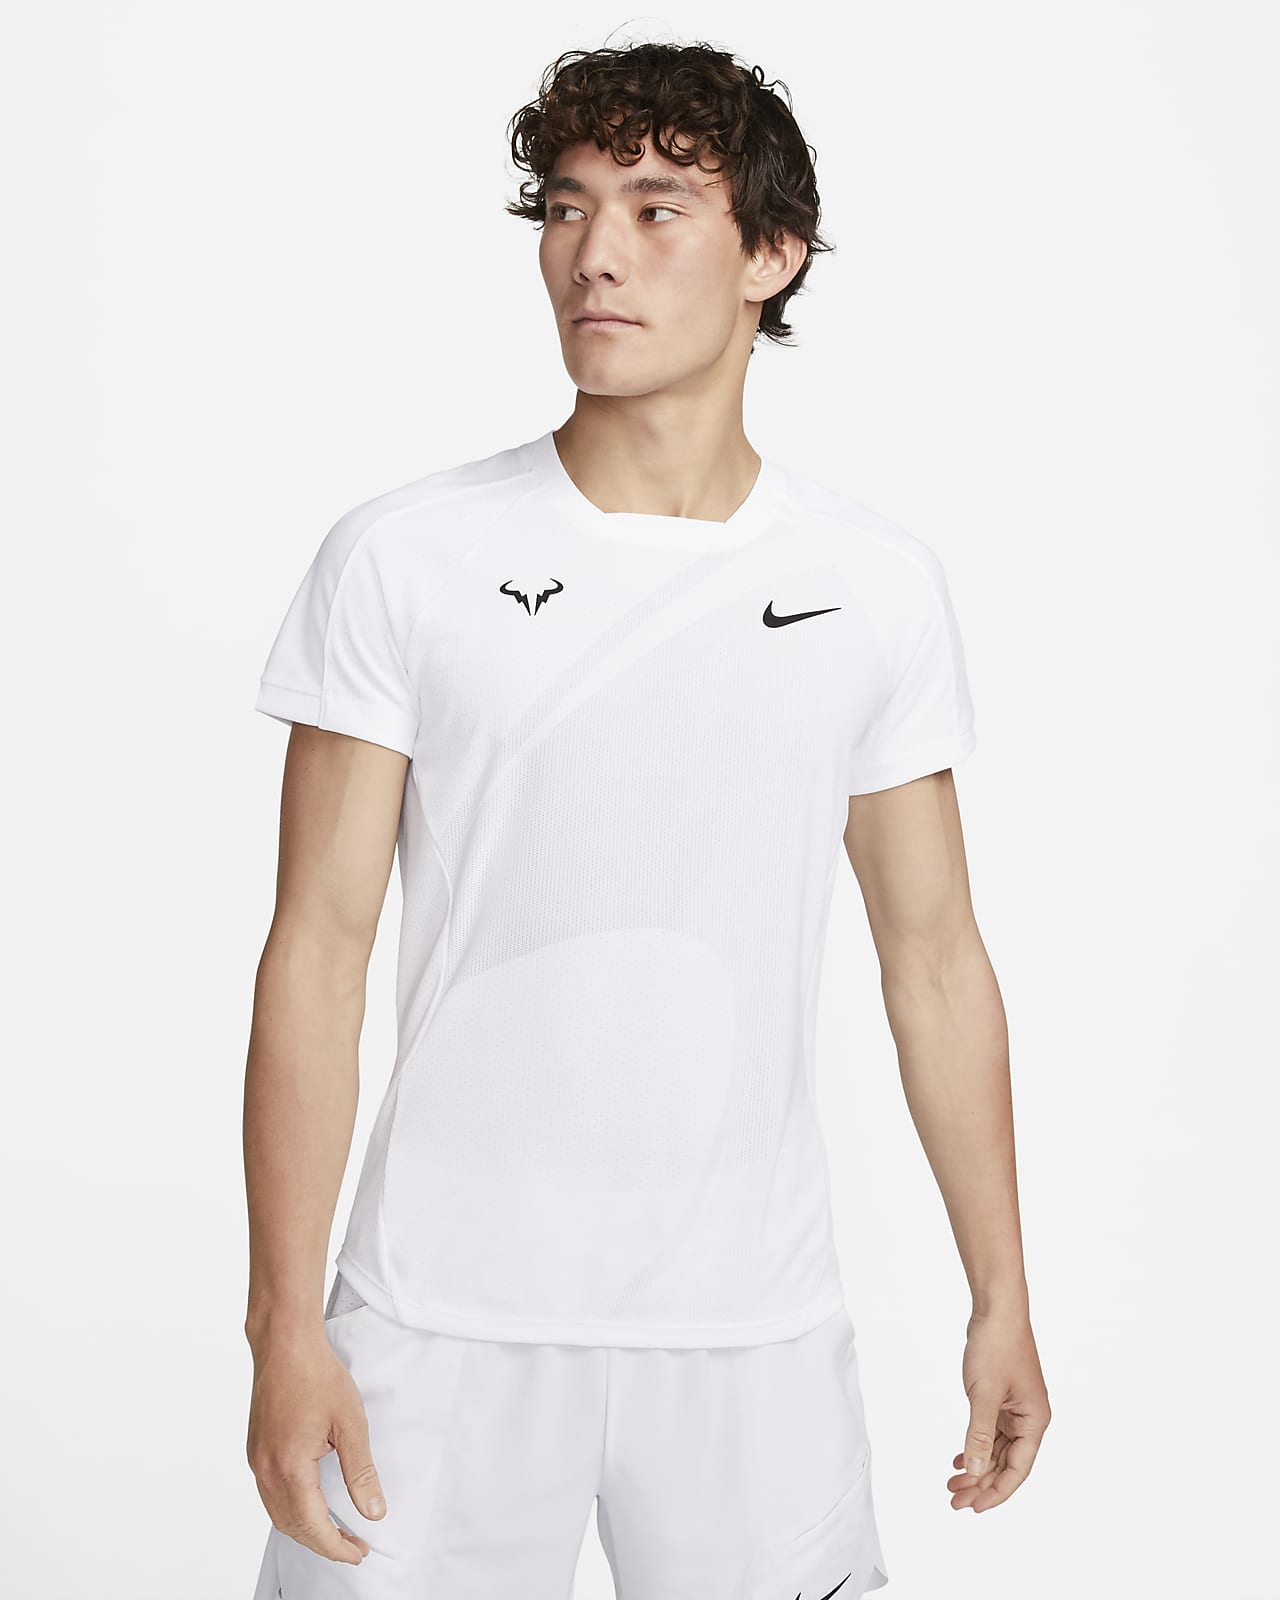 Rafa Men's Nike Dri-FIT ADV Short-Sleeve Tennis Top